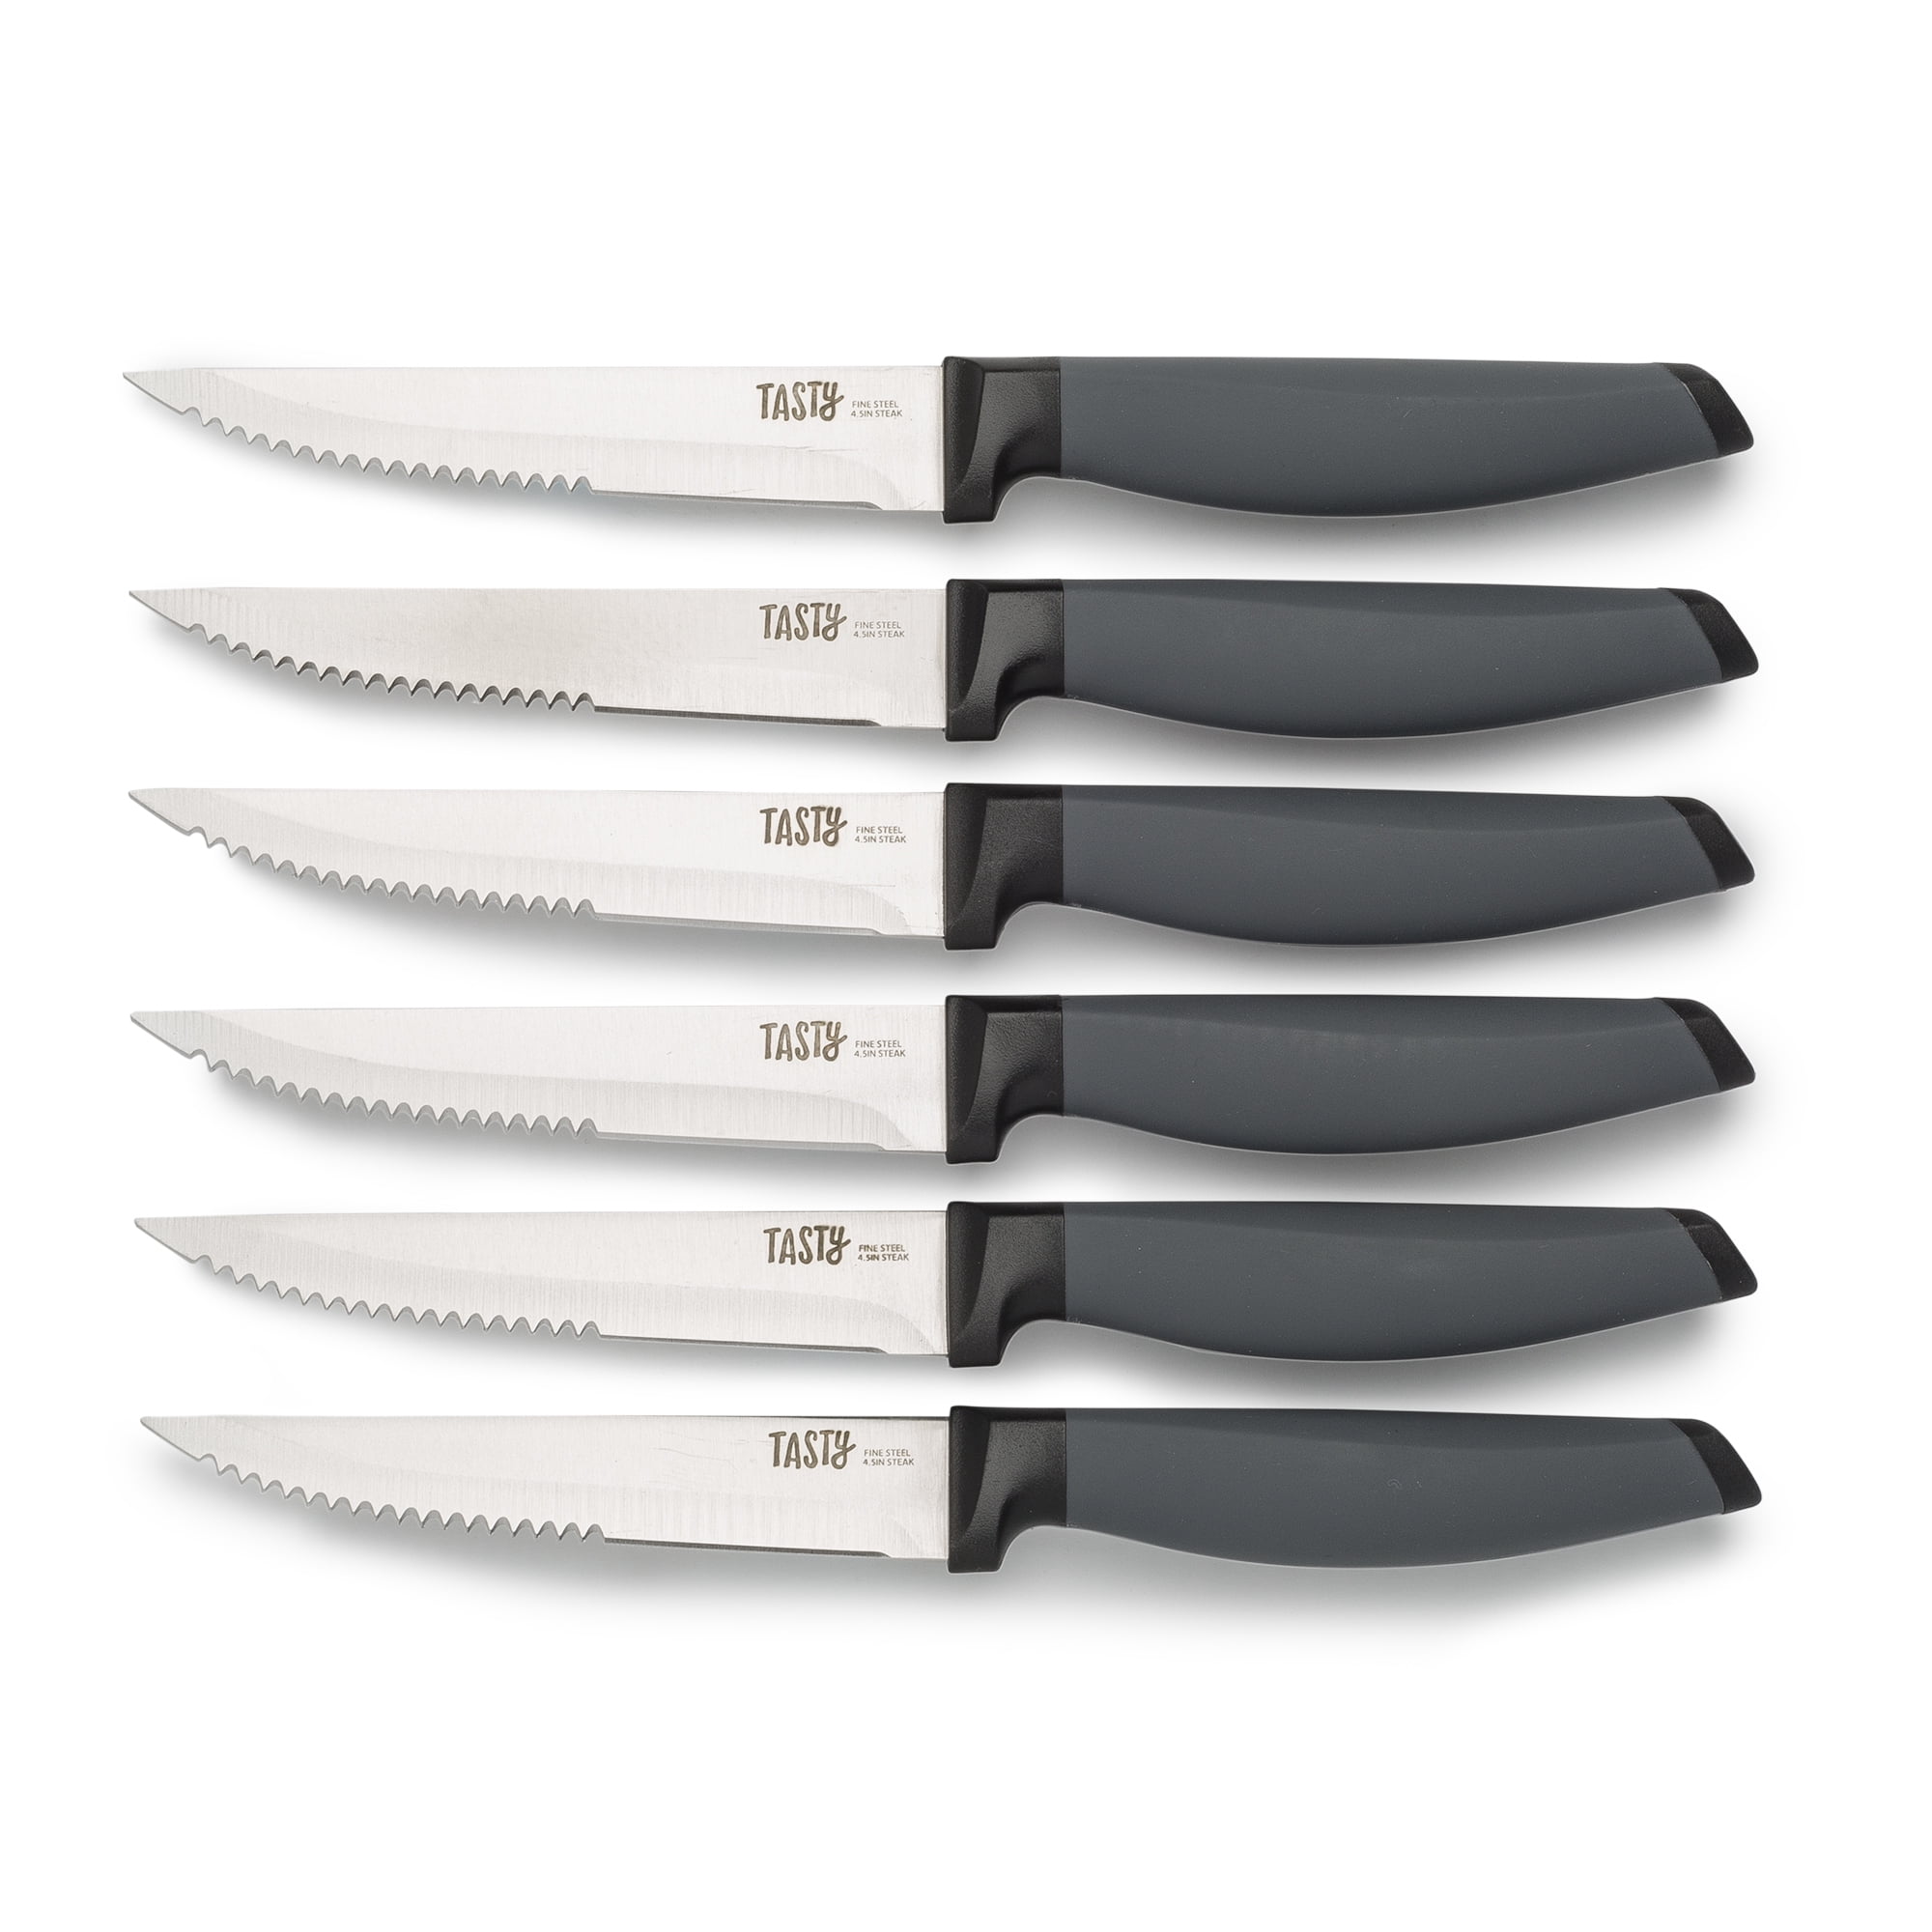 Brabantia Tasty+ Knife Block with 5 Knives, 1 set - Interismo